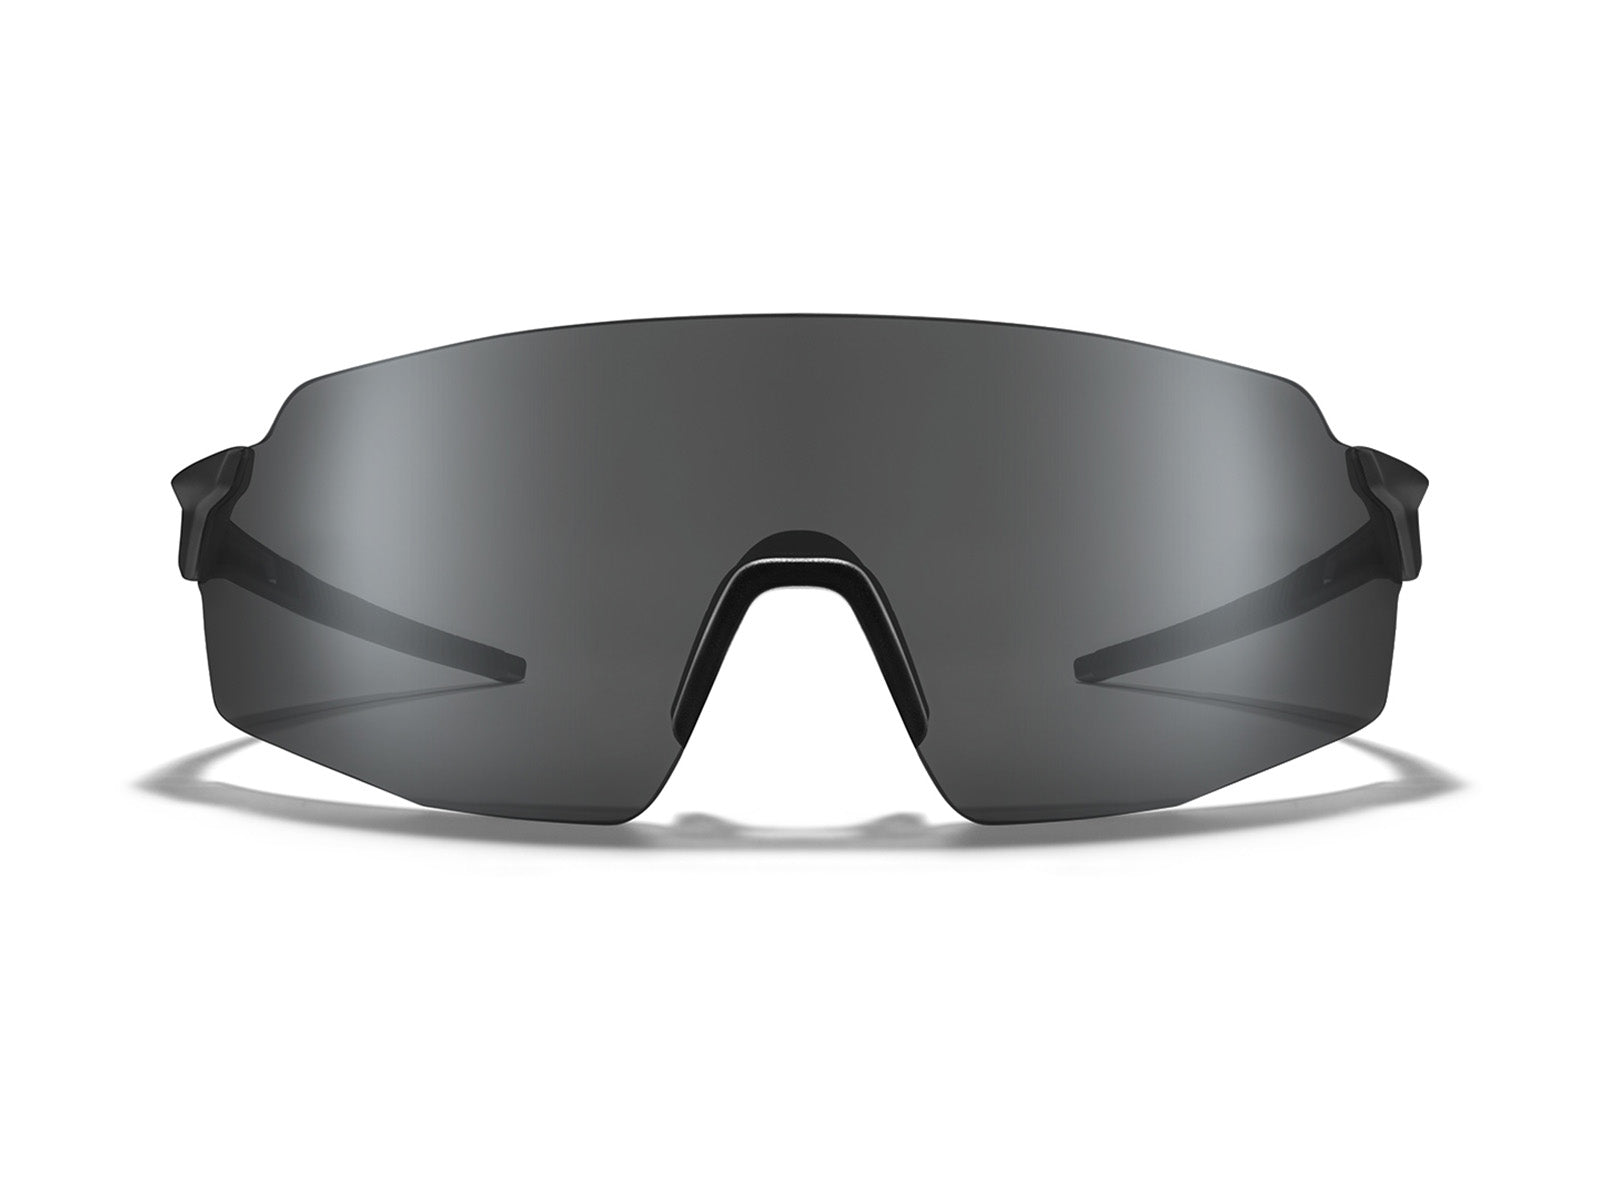 Roka SL-1x Cycling Sunglasses Matte Black/Carbon, One Size